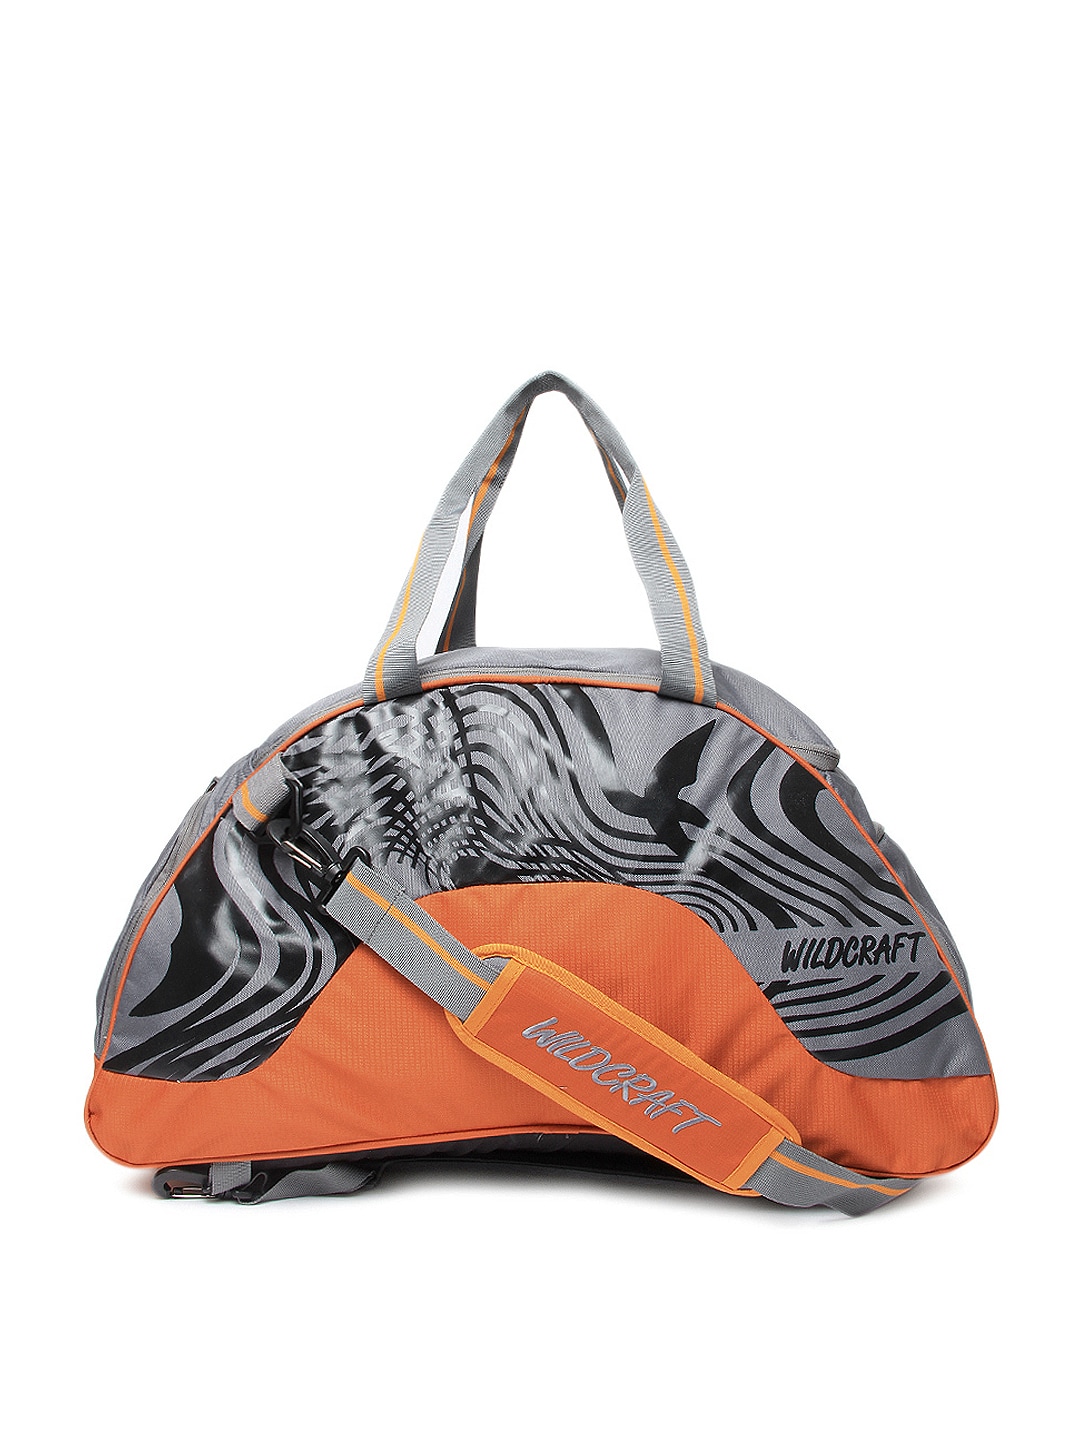 Wildcraft Unisex Grey & Orange Printed Duffle Bag